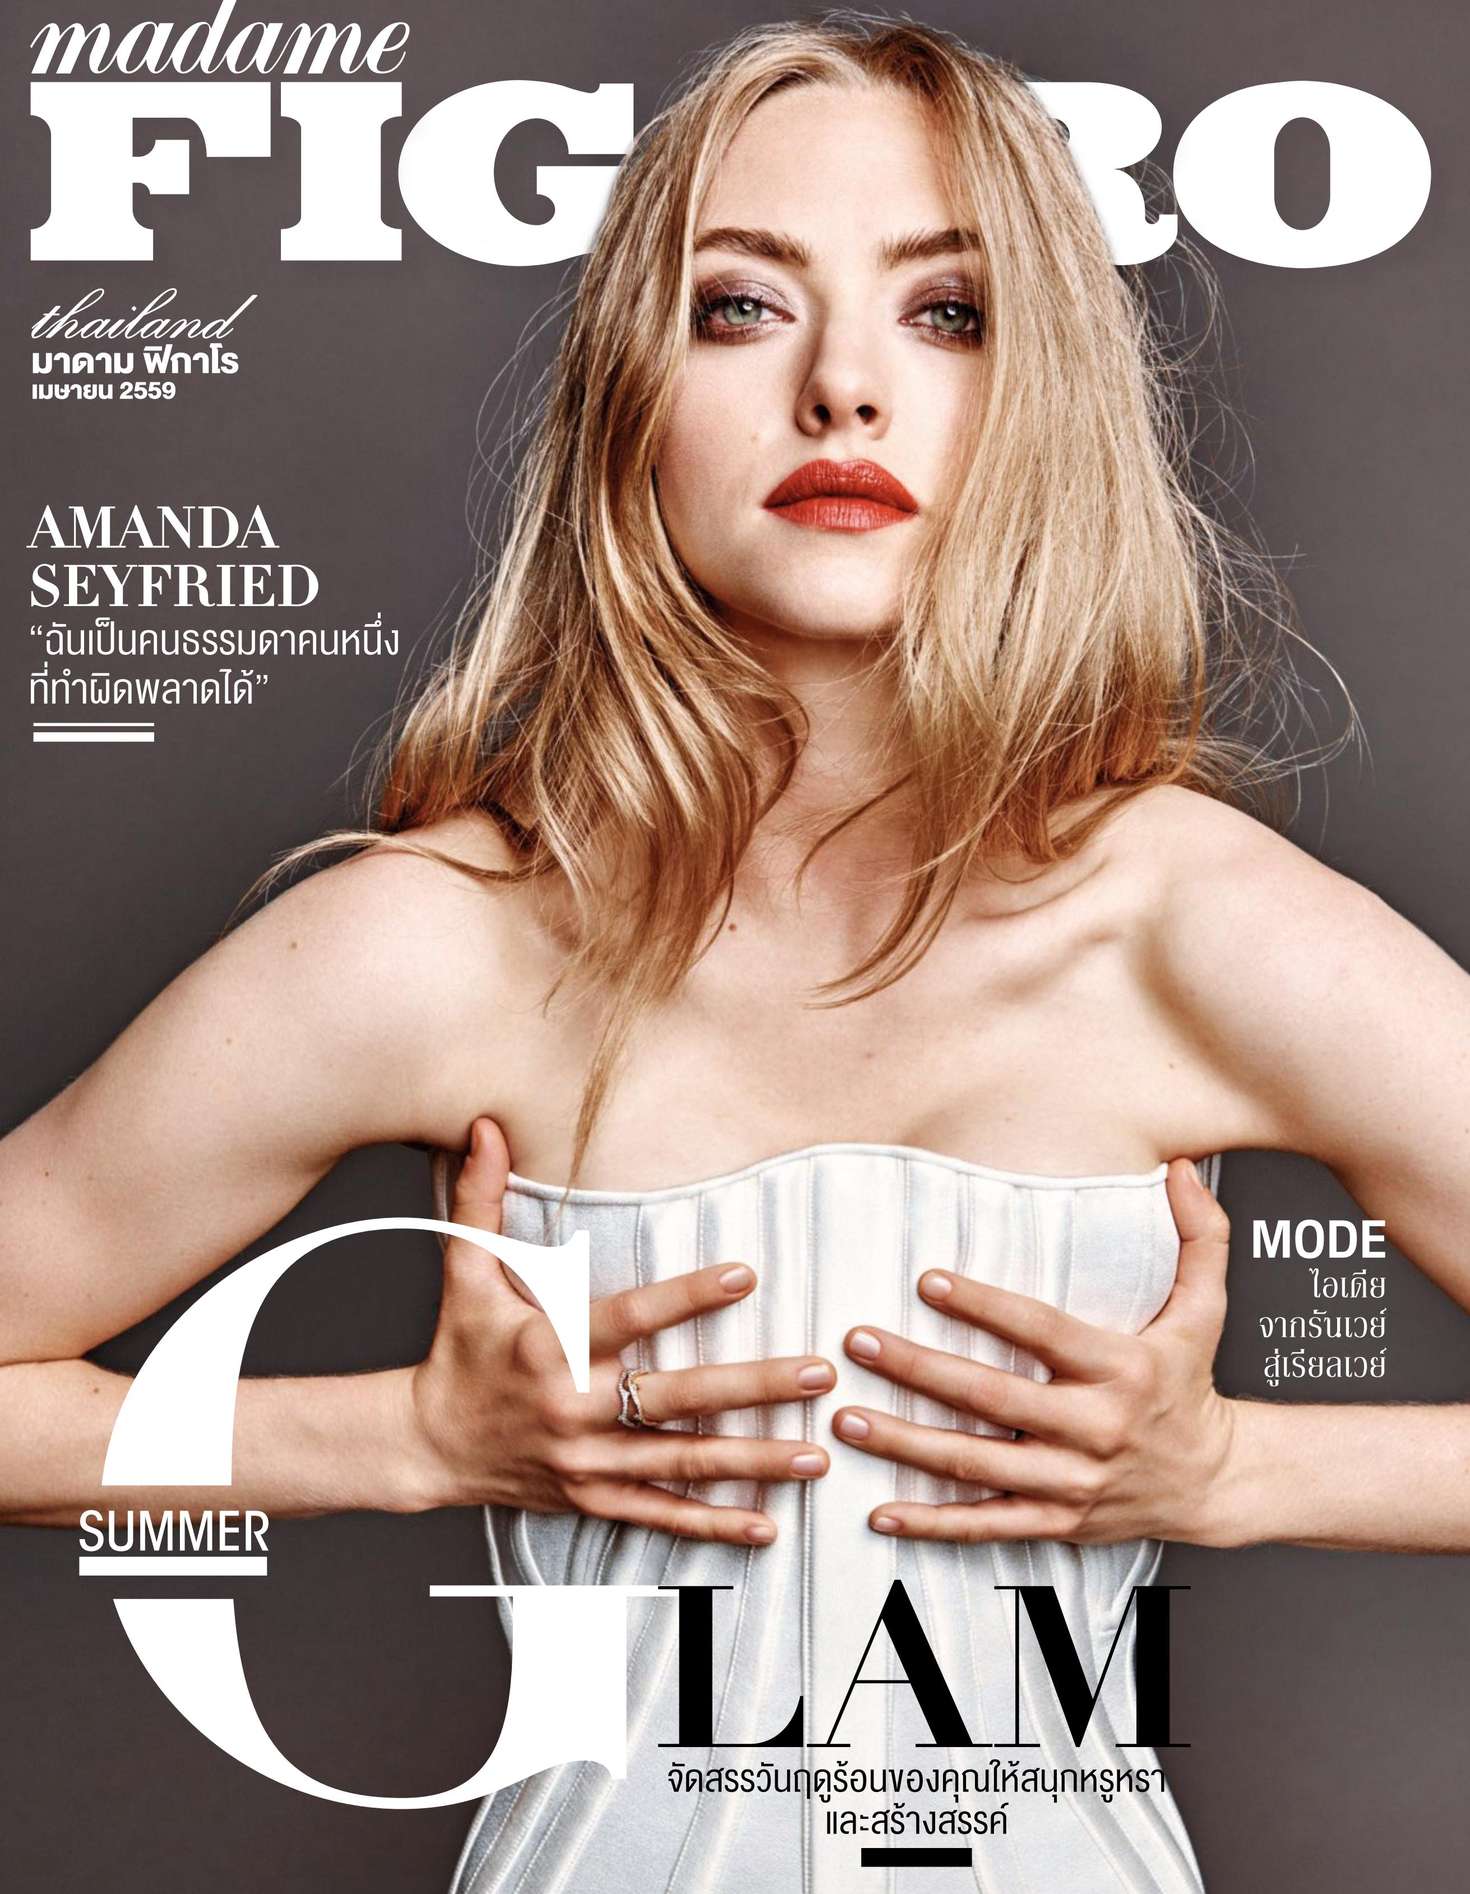 Amanda Seyfried 2016 : Amanda Seyfried: Madame Figaro Thailand 2016 -09